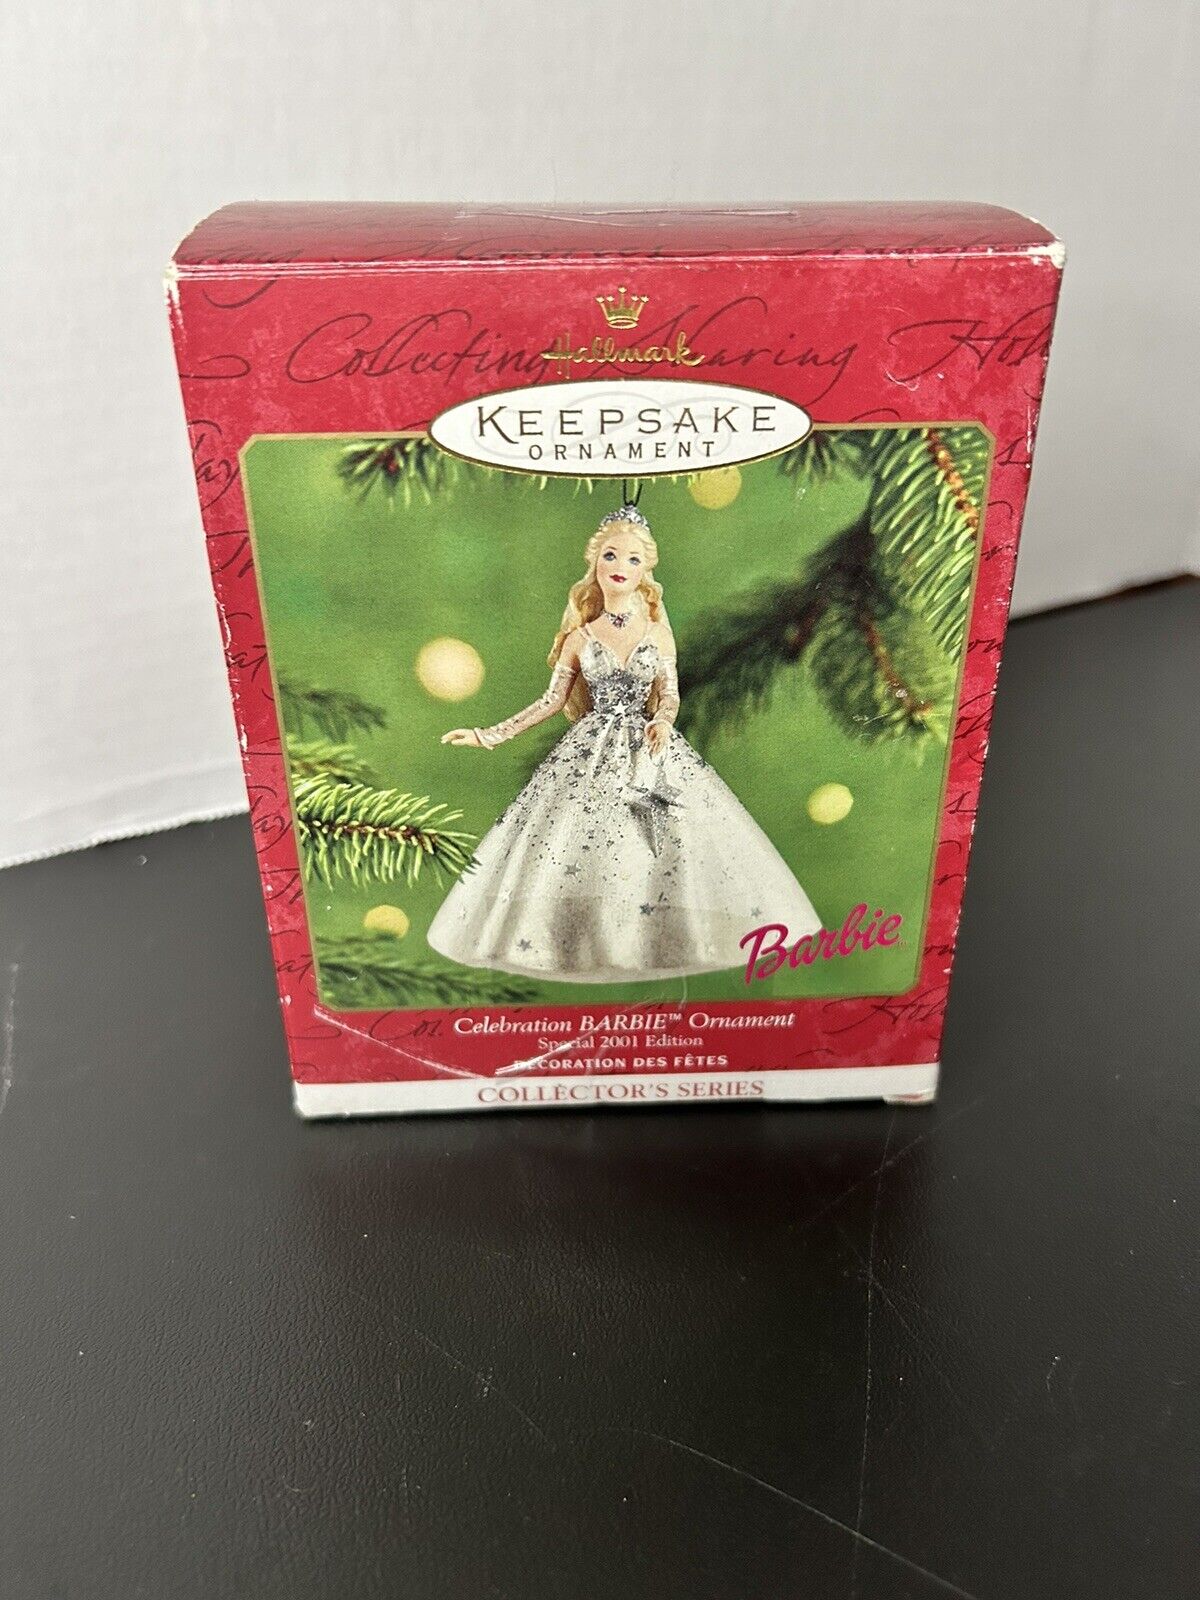 Hallmark Keepsake Celebration Barbie Ornament Special 2001 Edition 2nd in Series